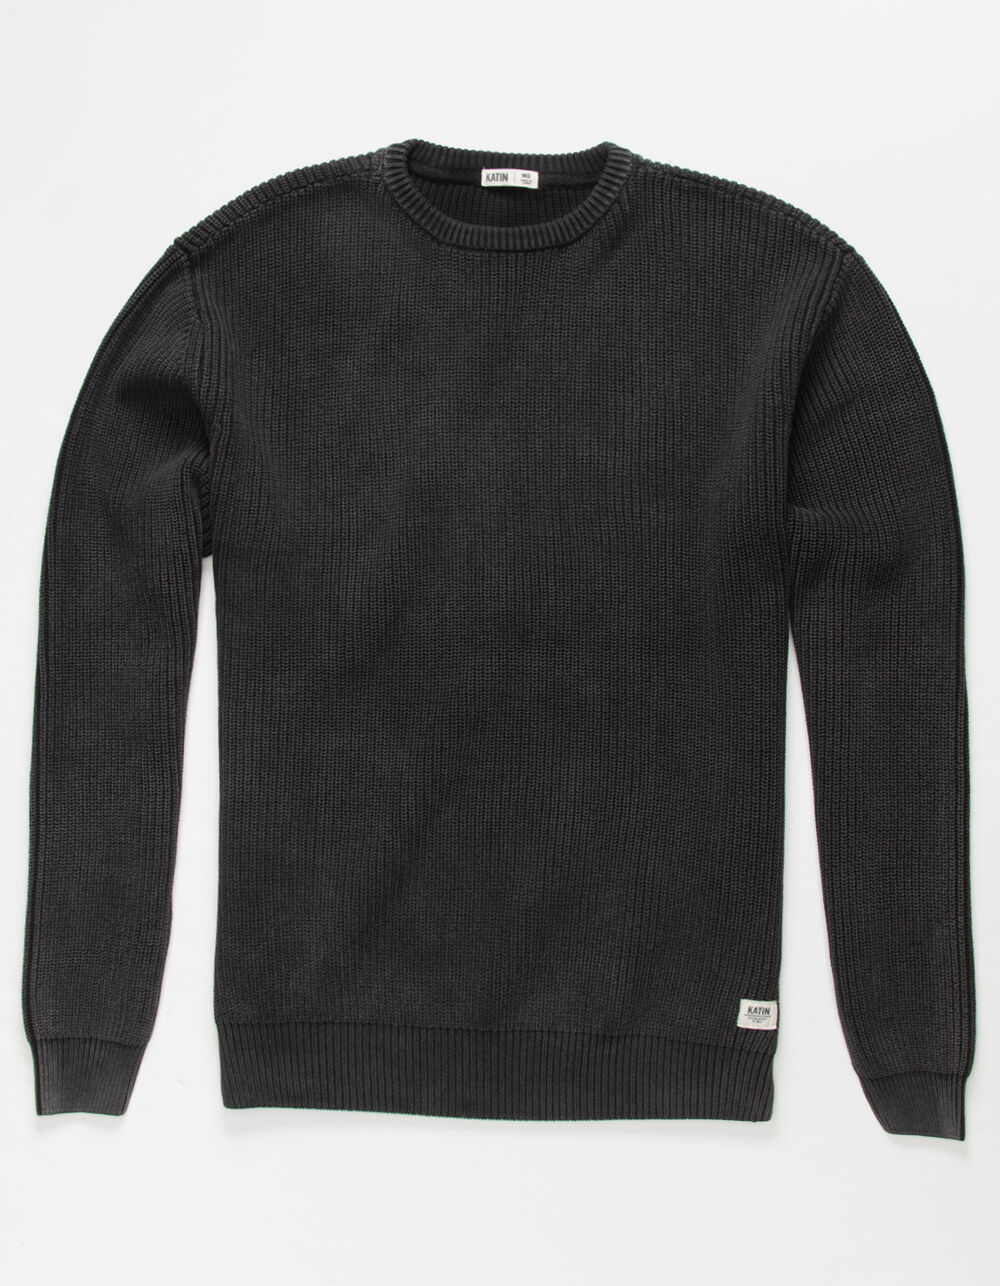 KATIN Swell Mens Sweater - BLACK | Tillys